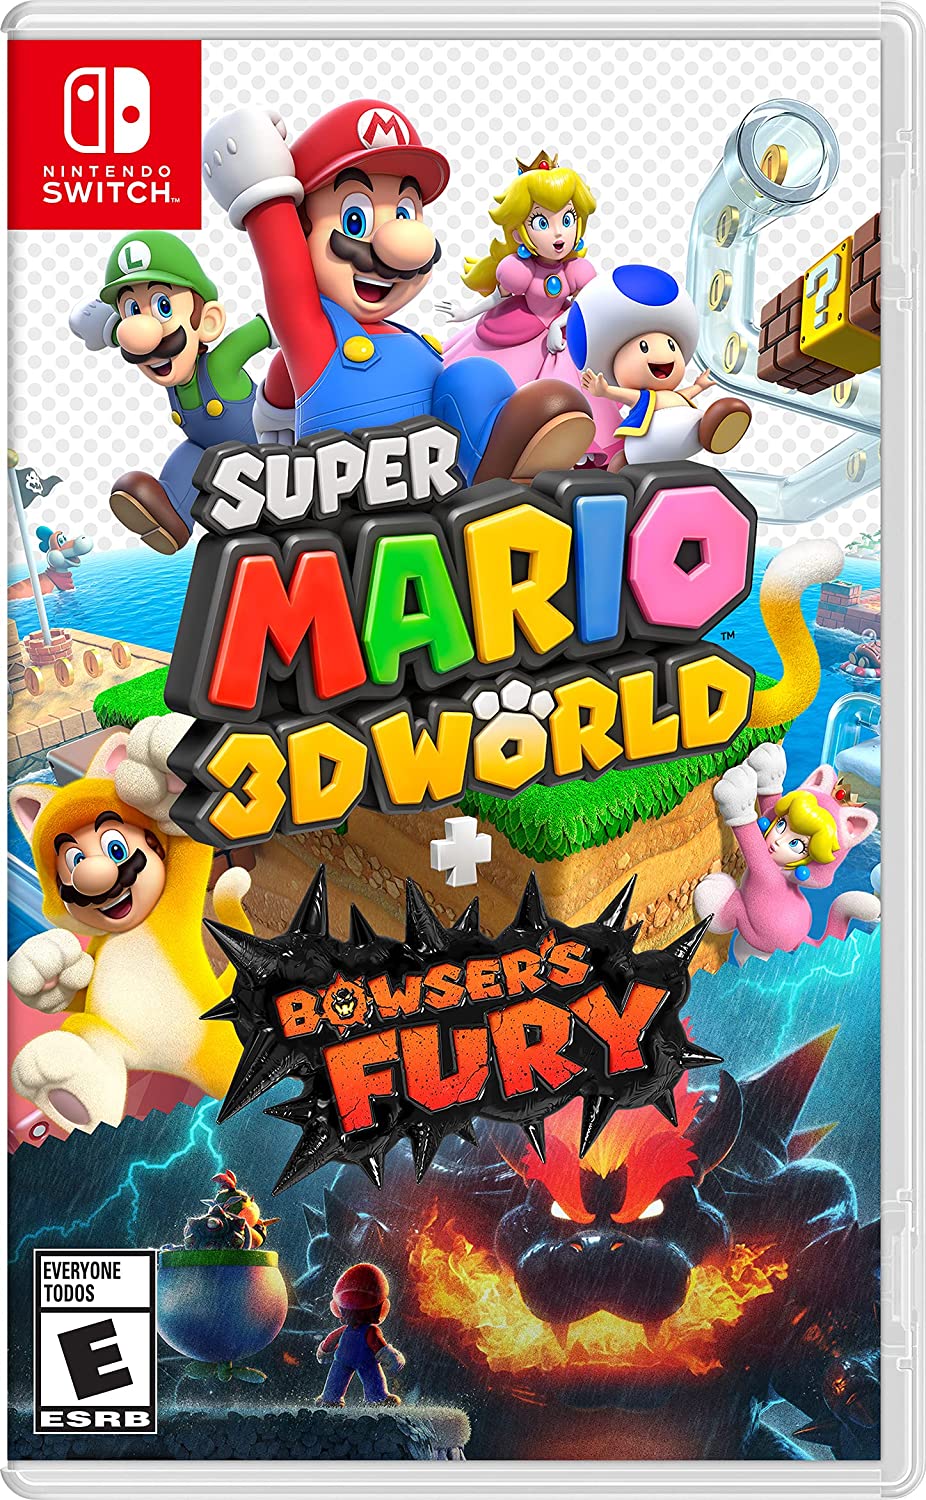 Super Mario 3D World + Bowser's Fury (Nintendo Switch) - $39.99 + F/S - Amazon